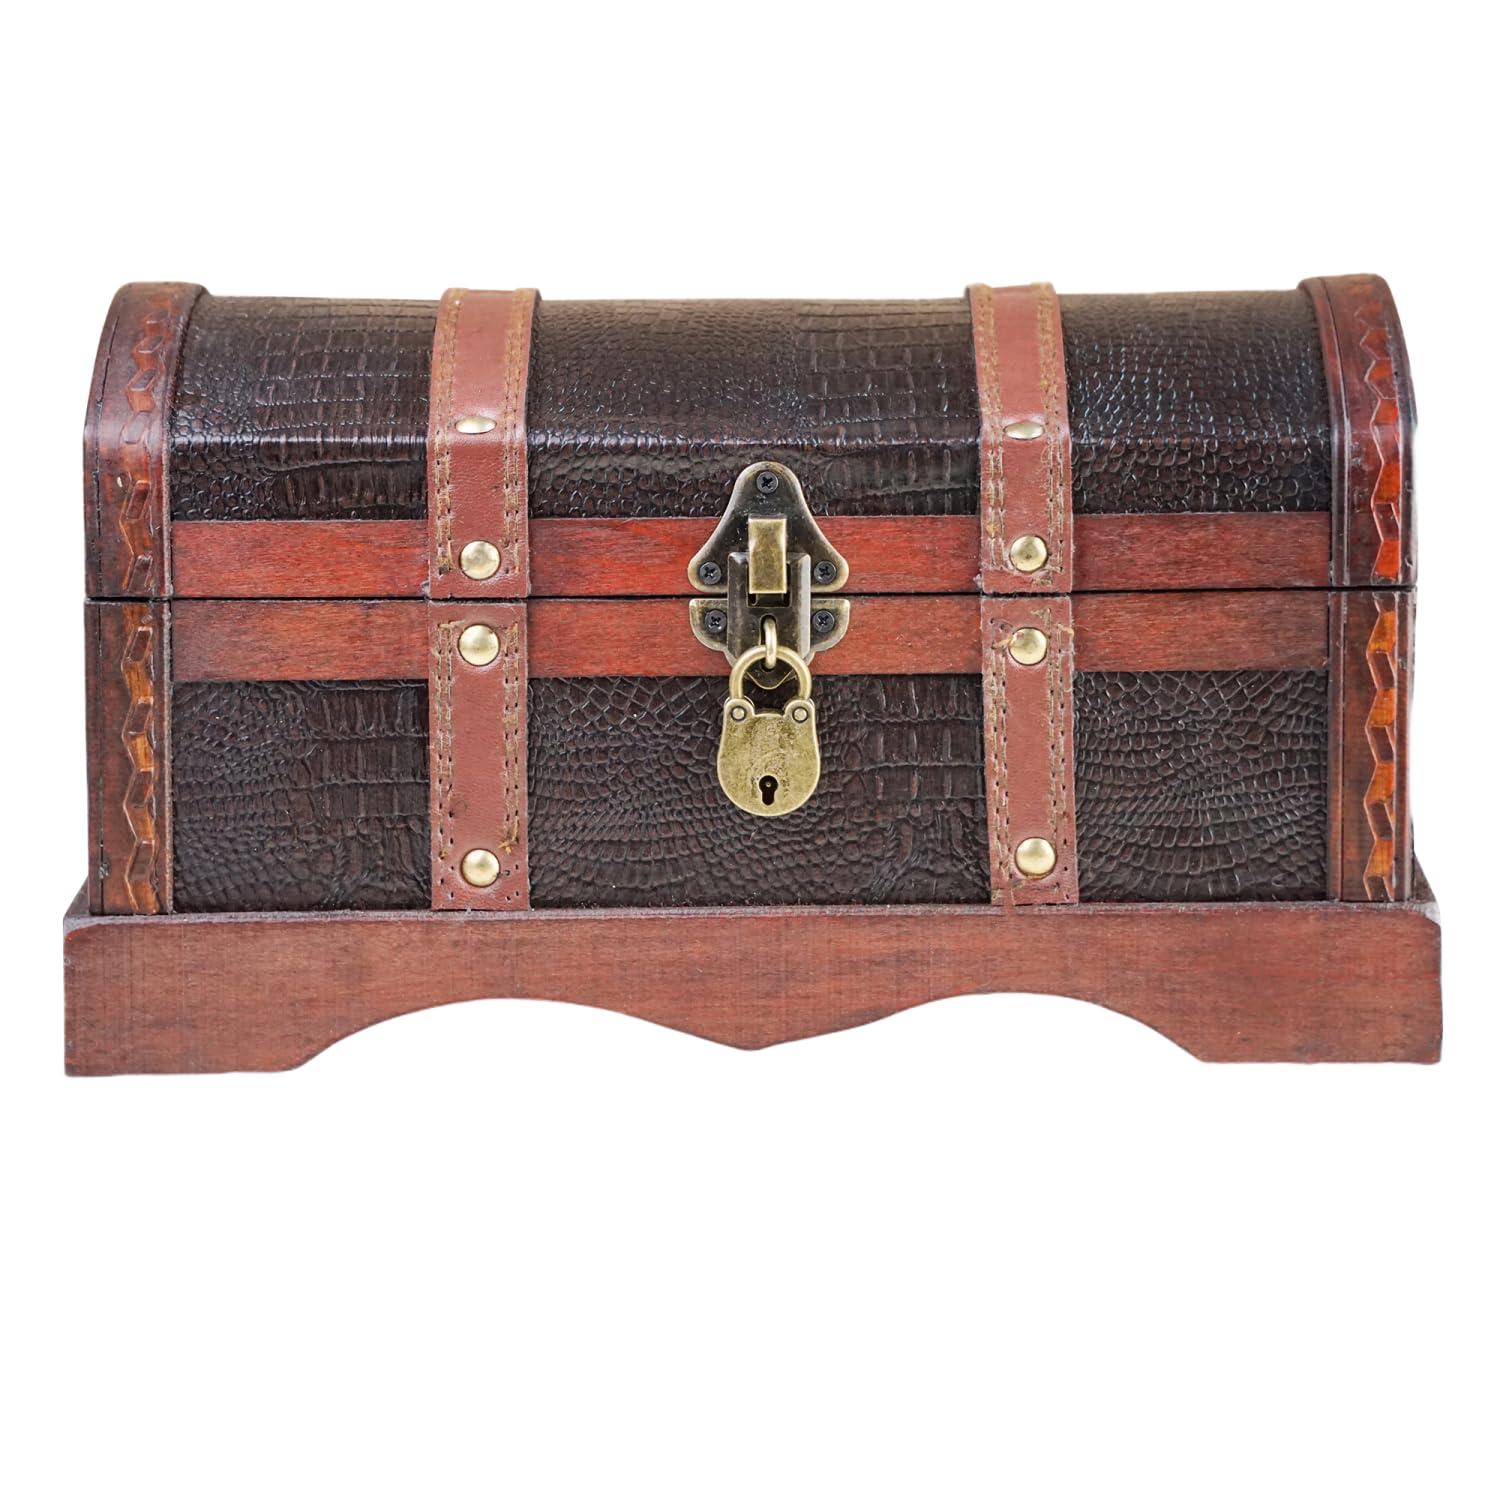 BRYNNBERG - Pirate Treasure Chest Storage Box - Croco 30x17x16cm - Durable Wooden Treasure Chest with Lock - Unique Handmade Decorative Wood Storage Box - Vintage Wood Chest Box - The Best Gift